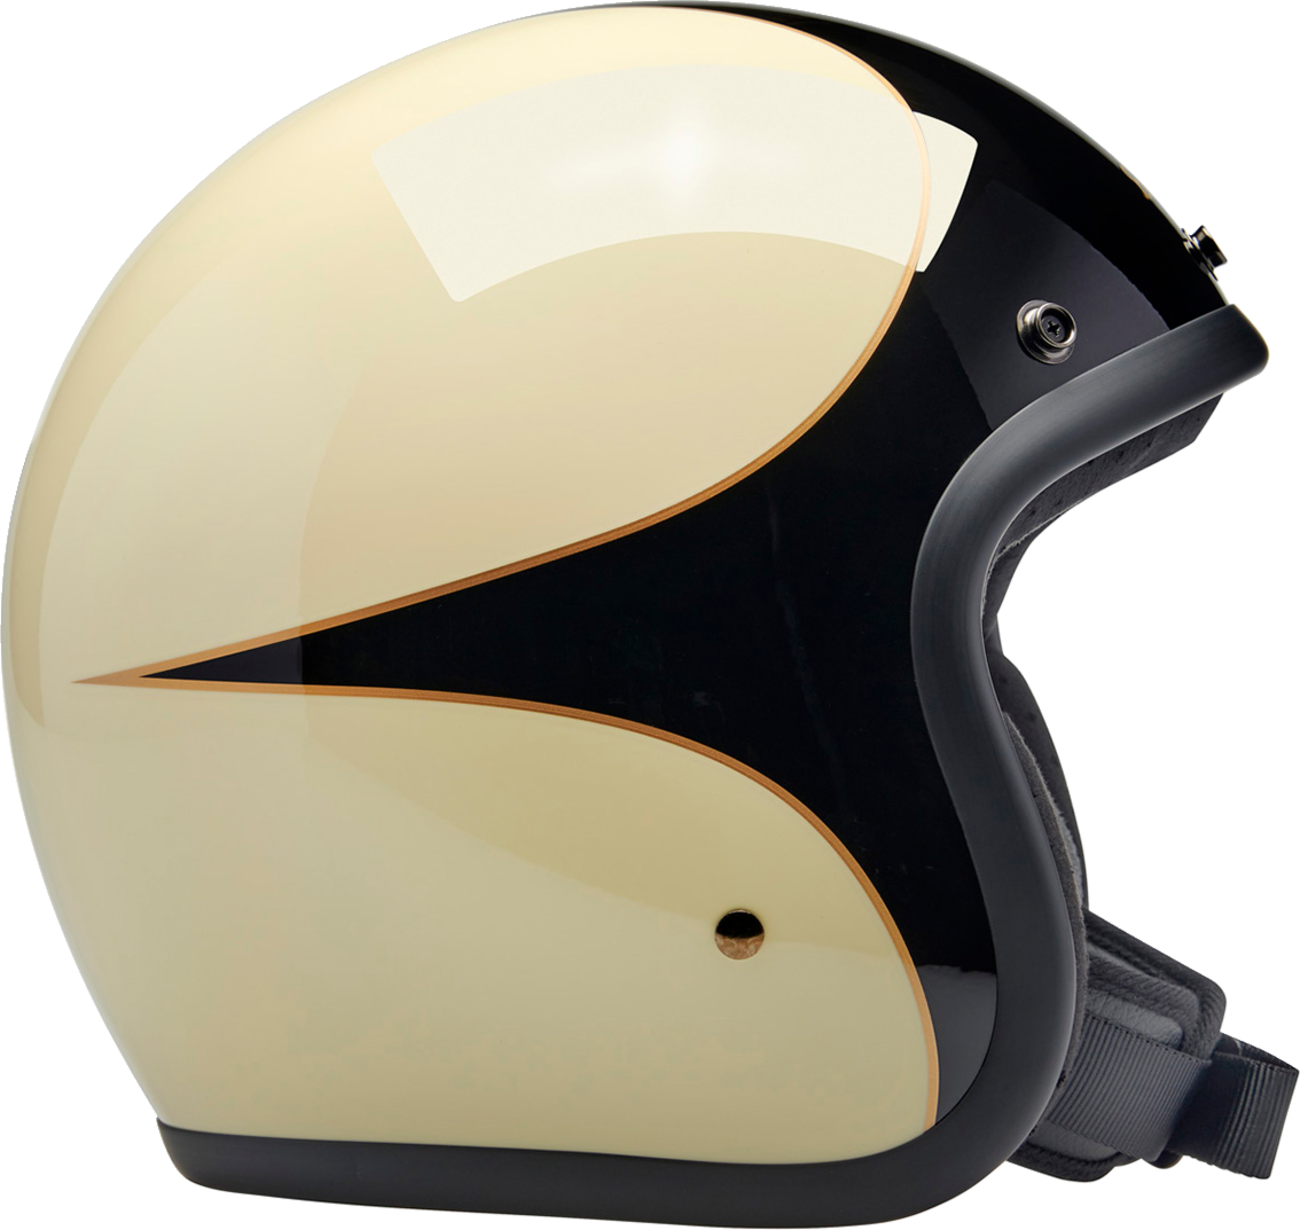 BILTWELL Bonanza Helmet - Gloss Vintage White/Black Scallop - XL 1001-559-205